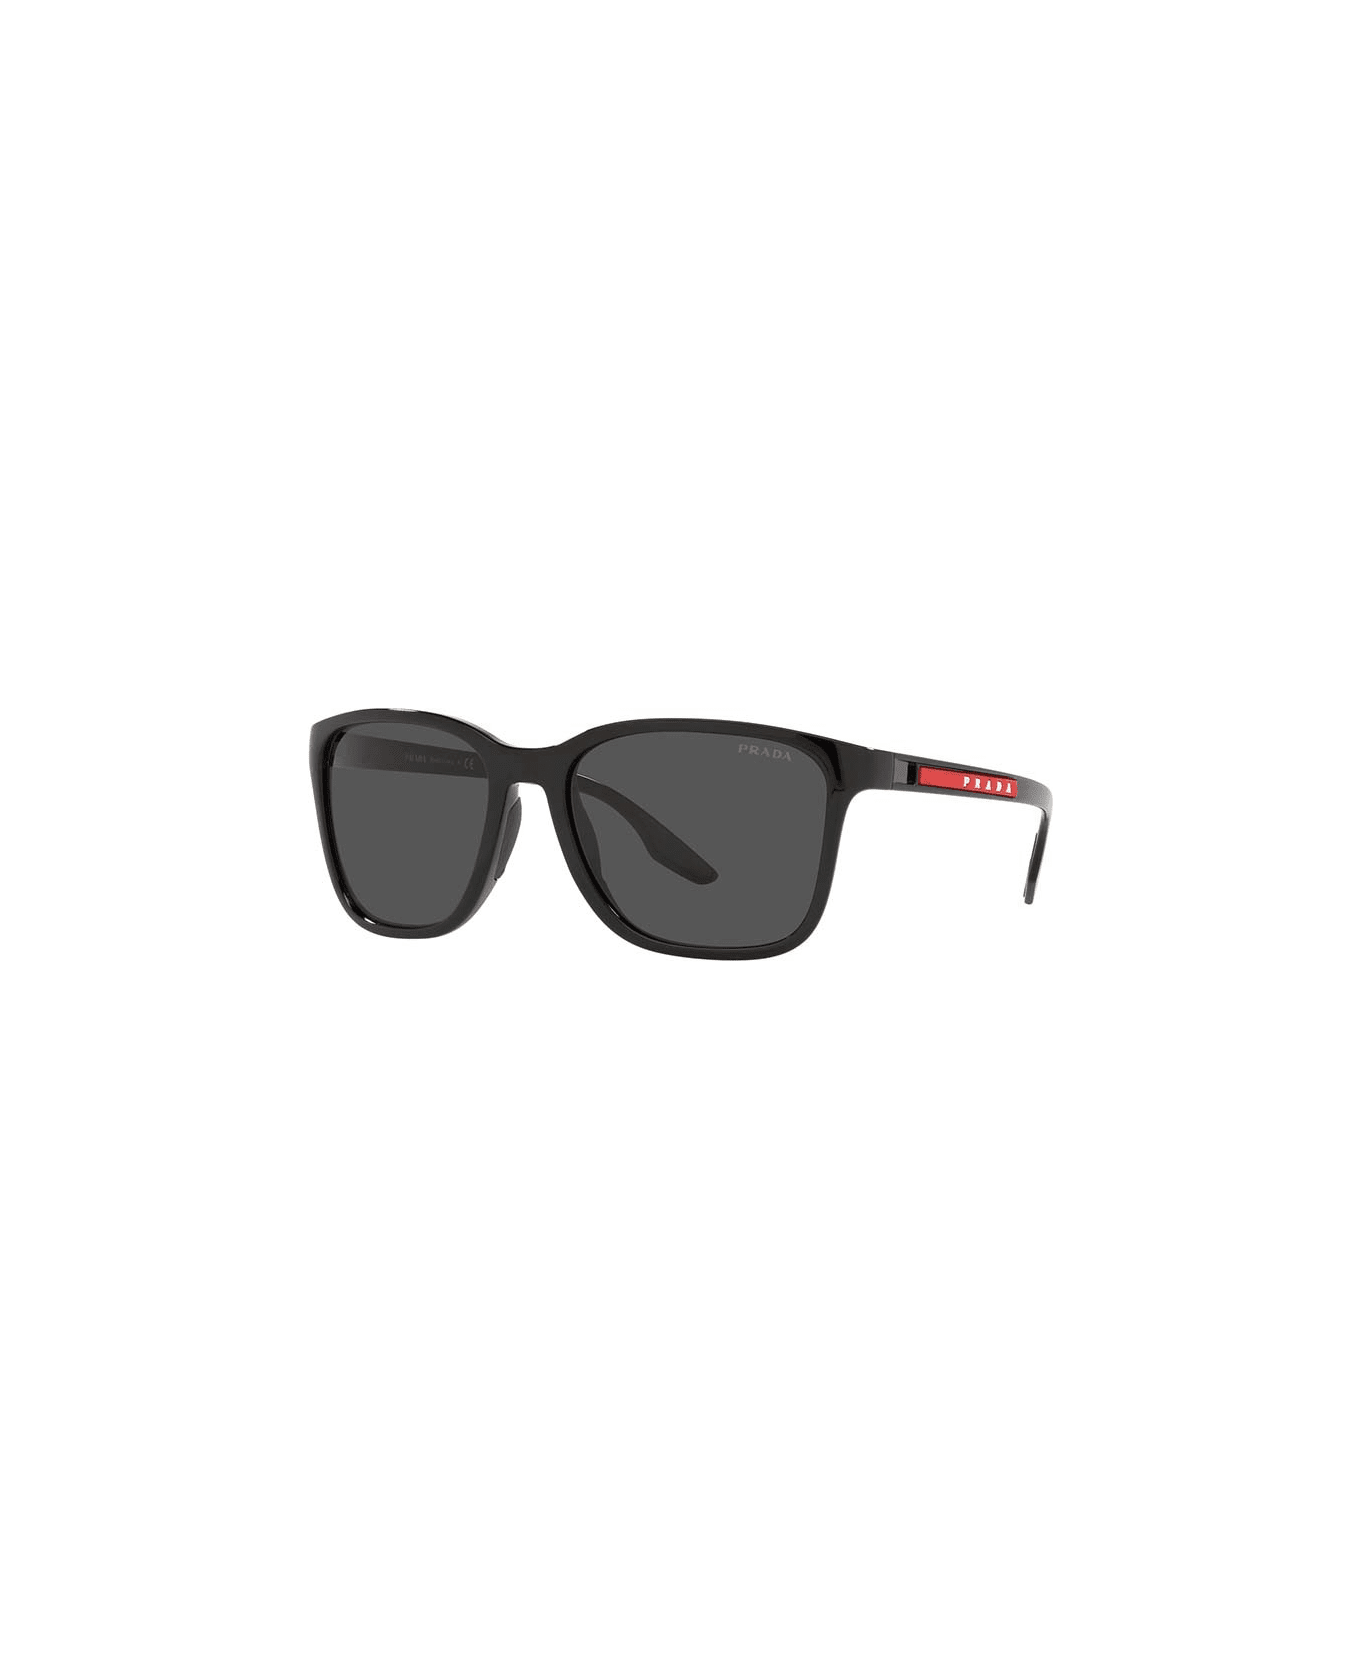 Prada Linea Rossa Eyewear - Nero/Grigio アイウェア